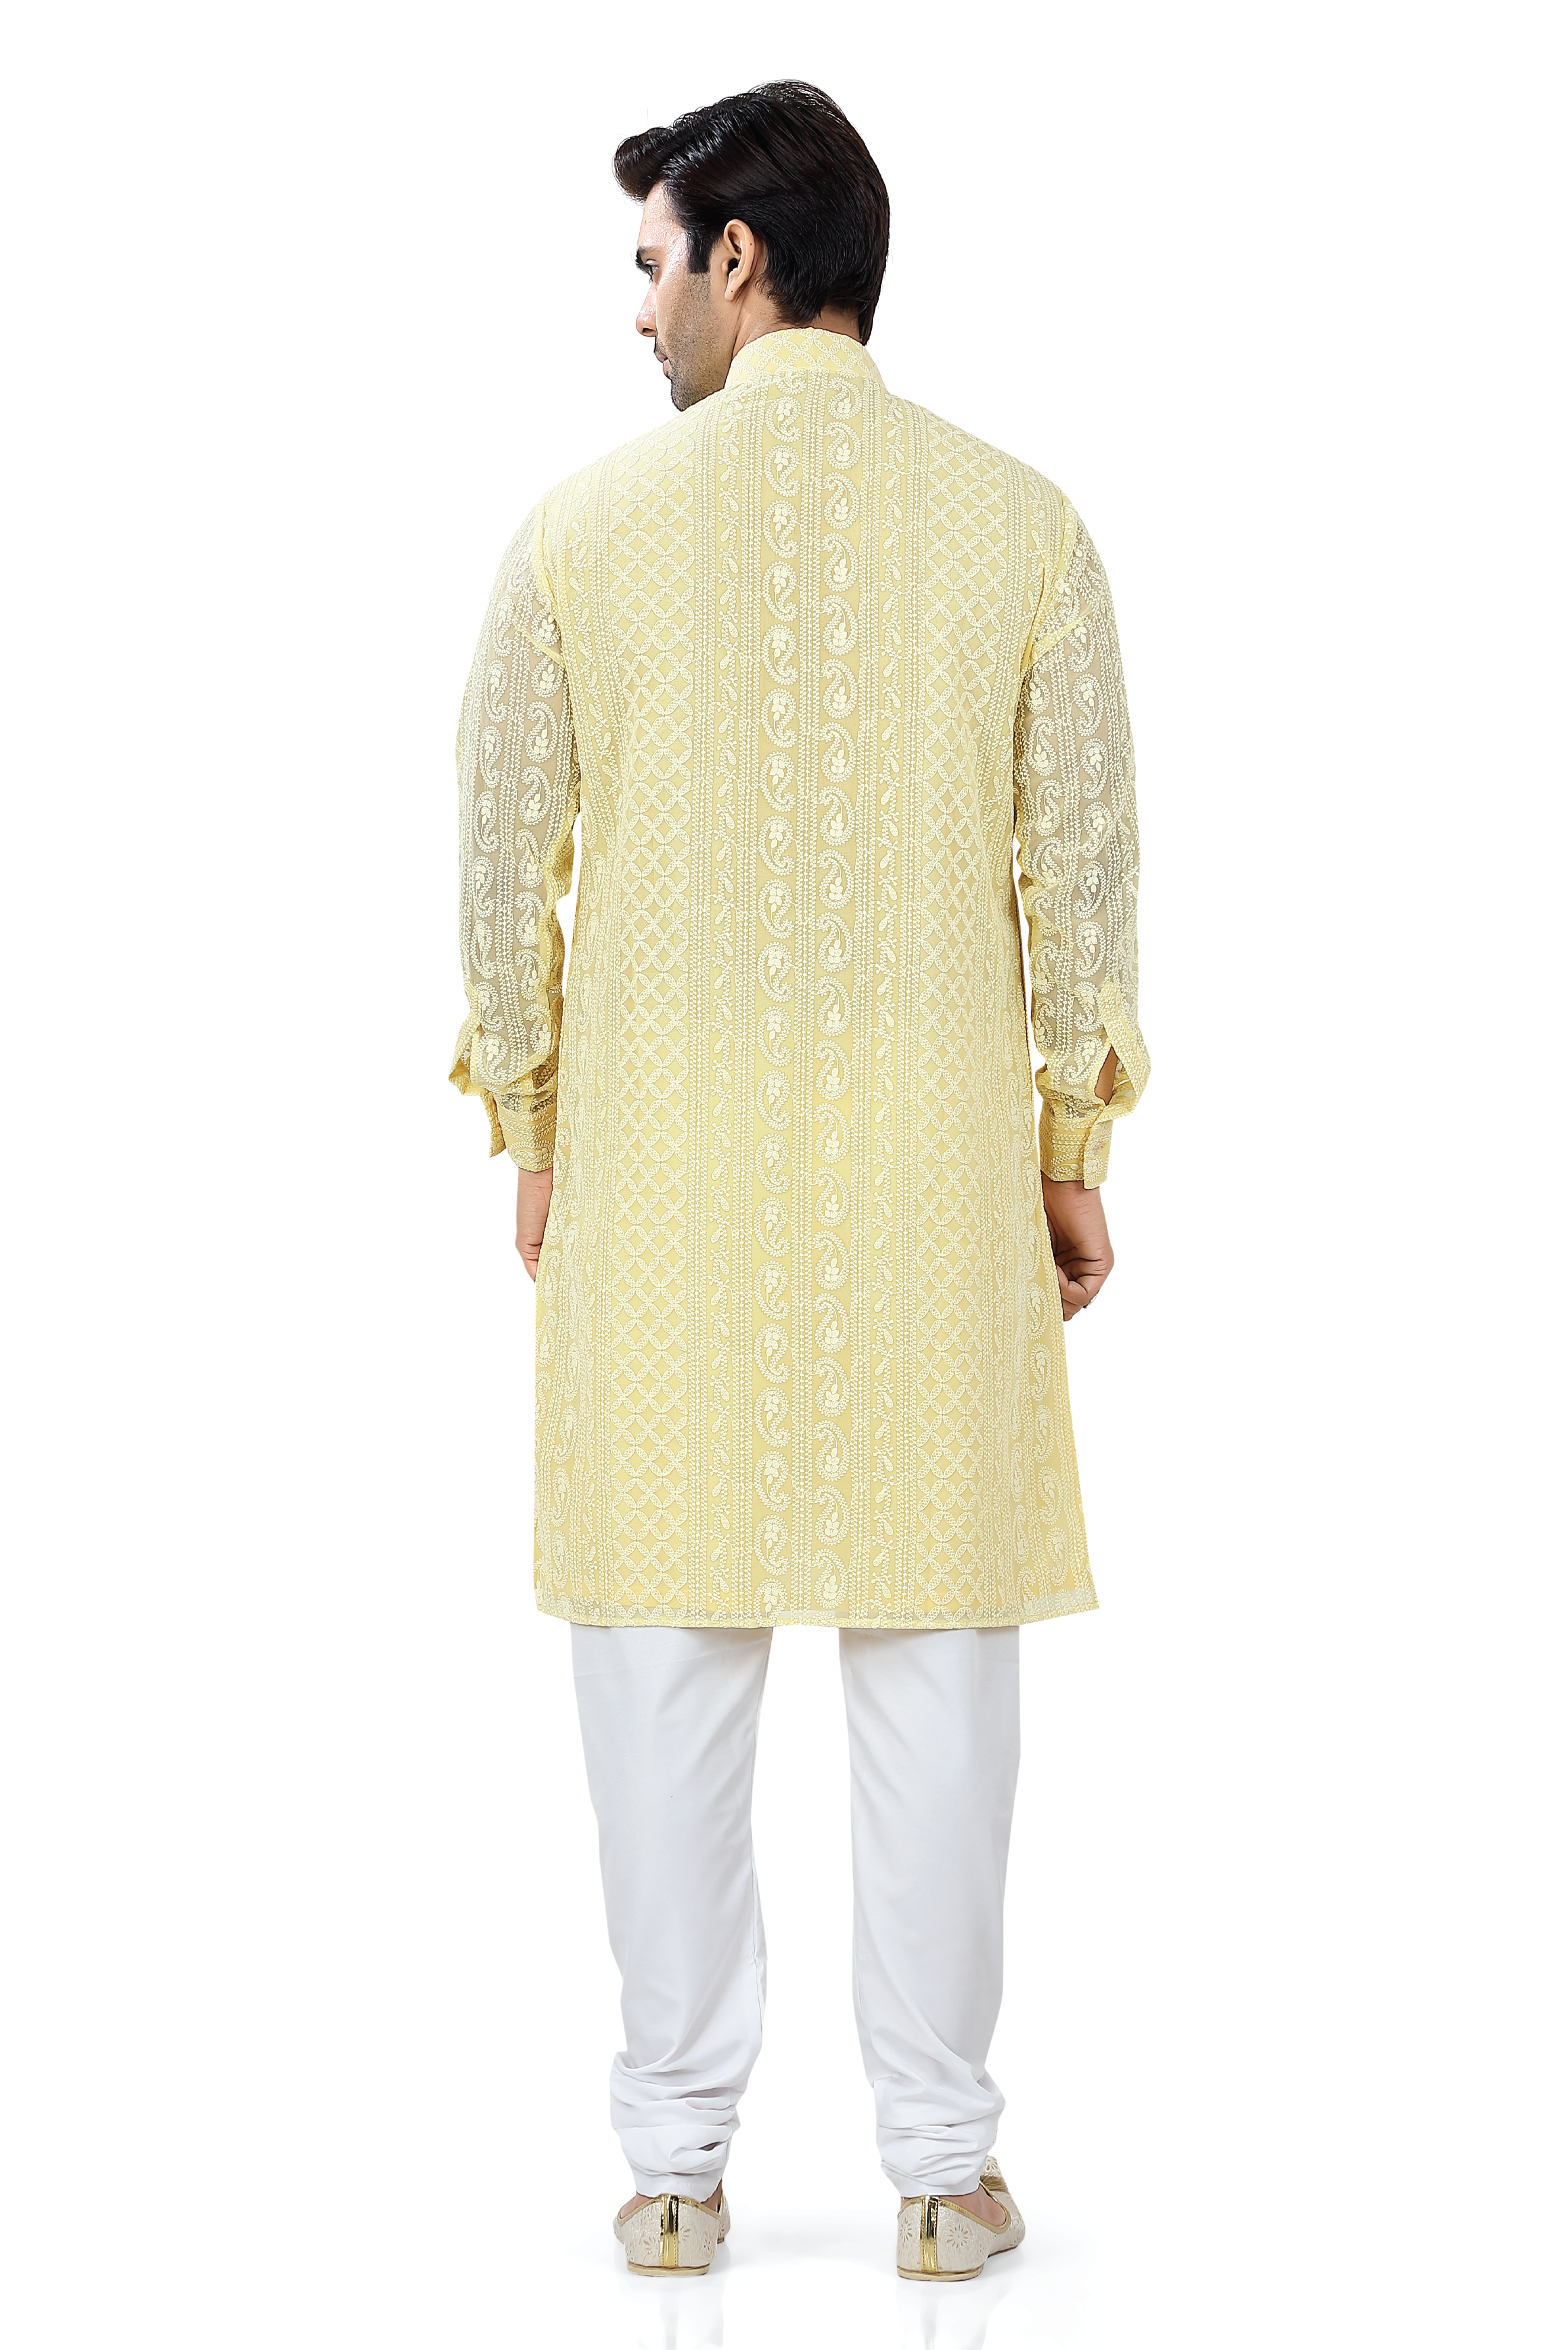 Lucknowi Chikankari Kurta Pajama Set in Yellow Color